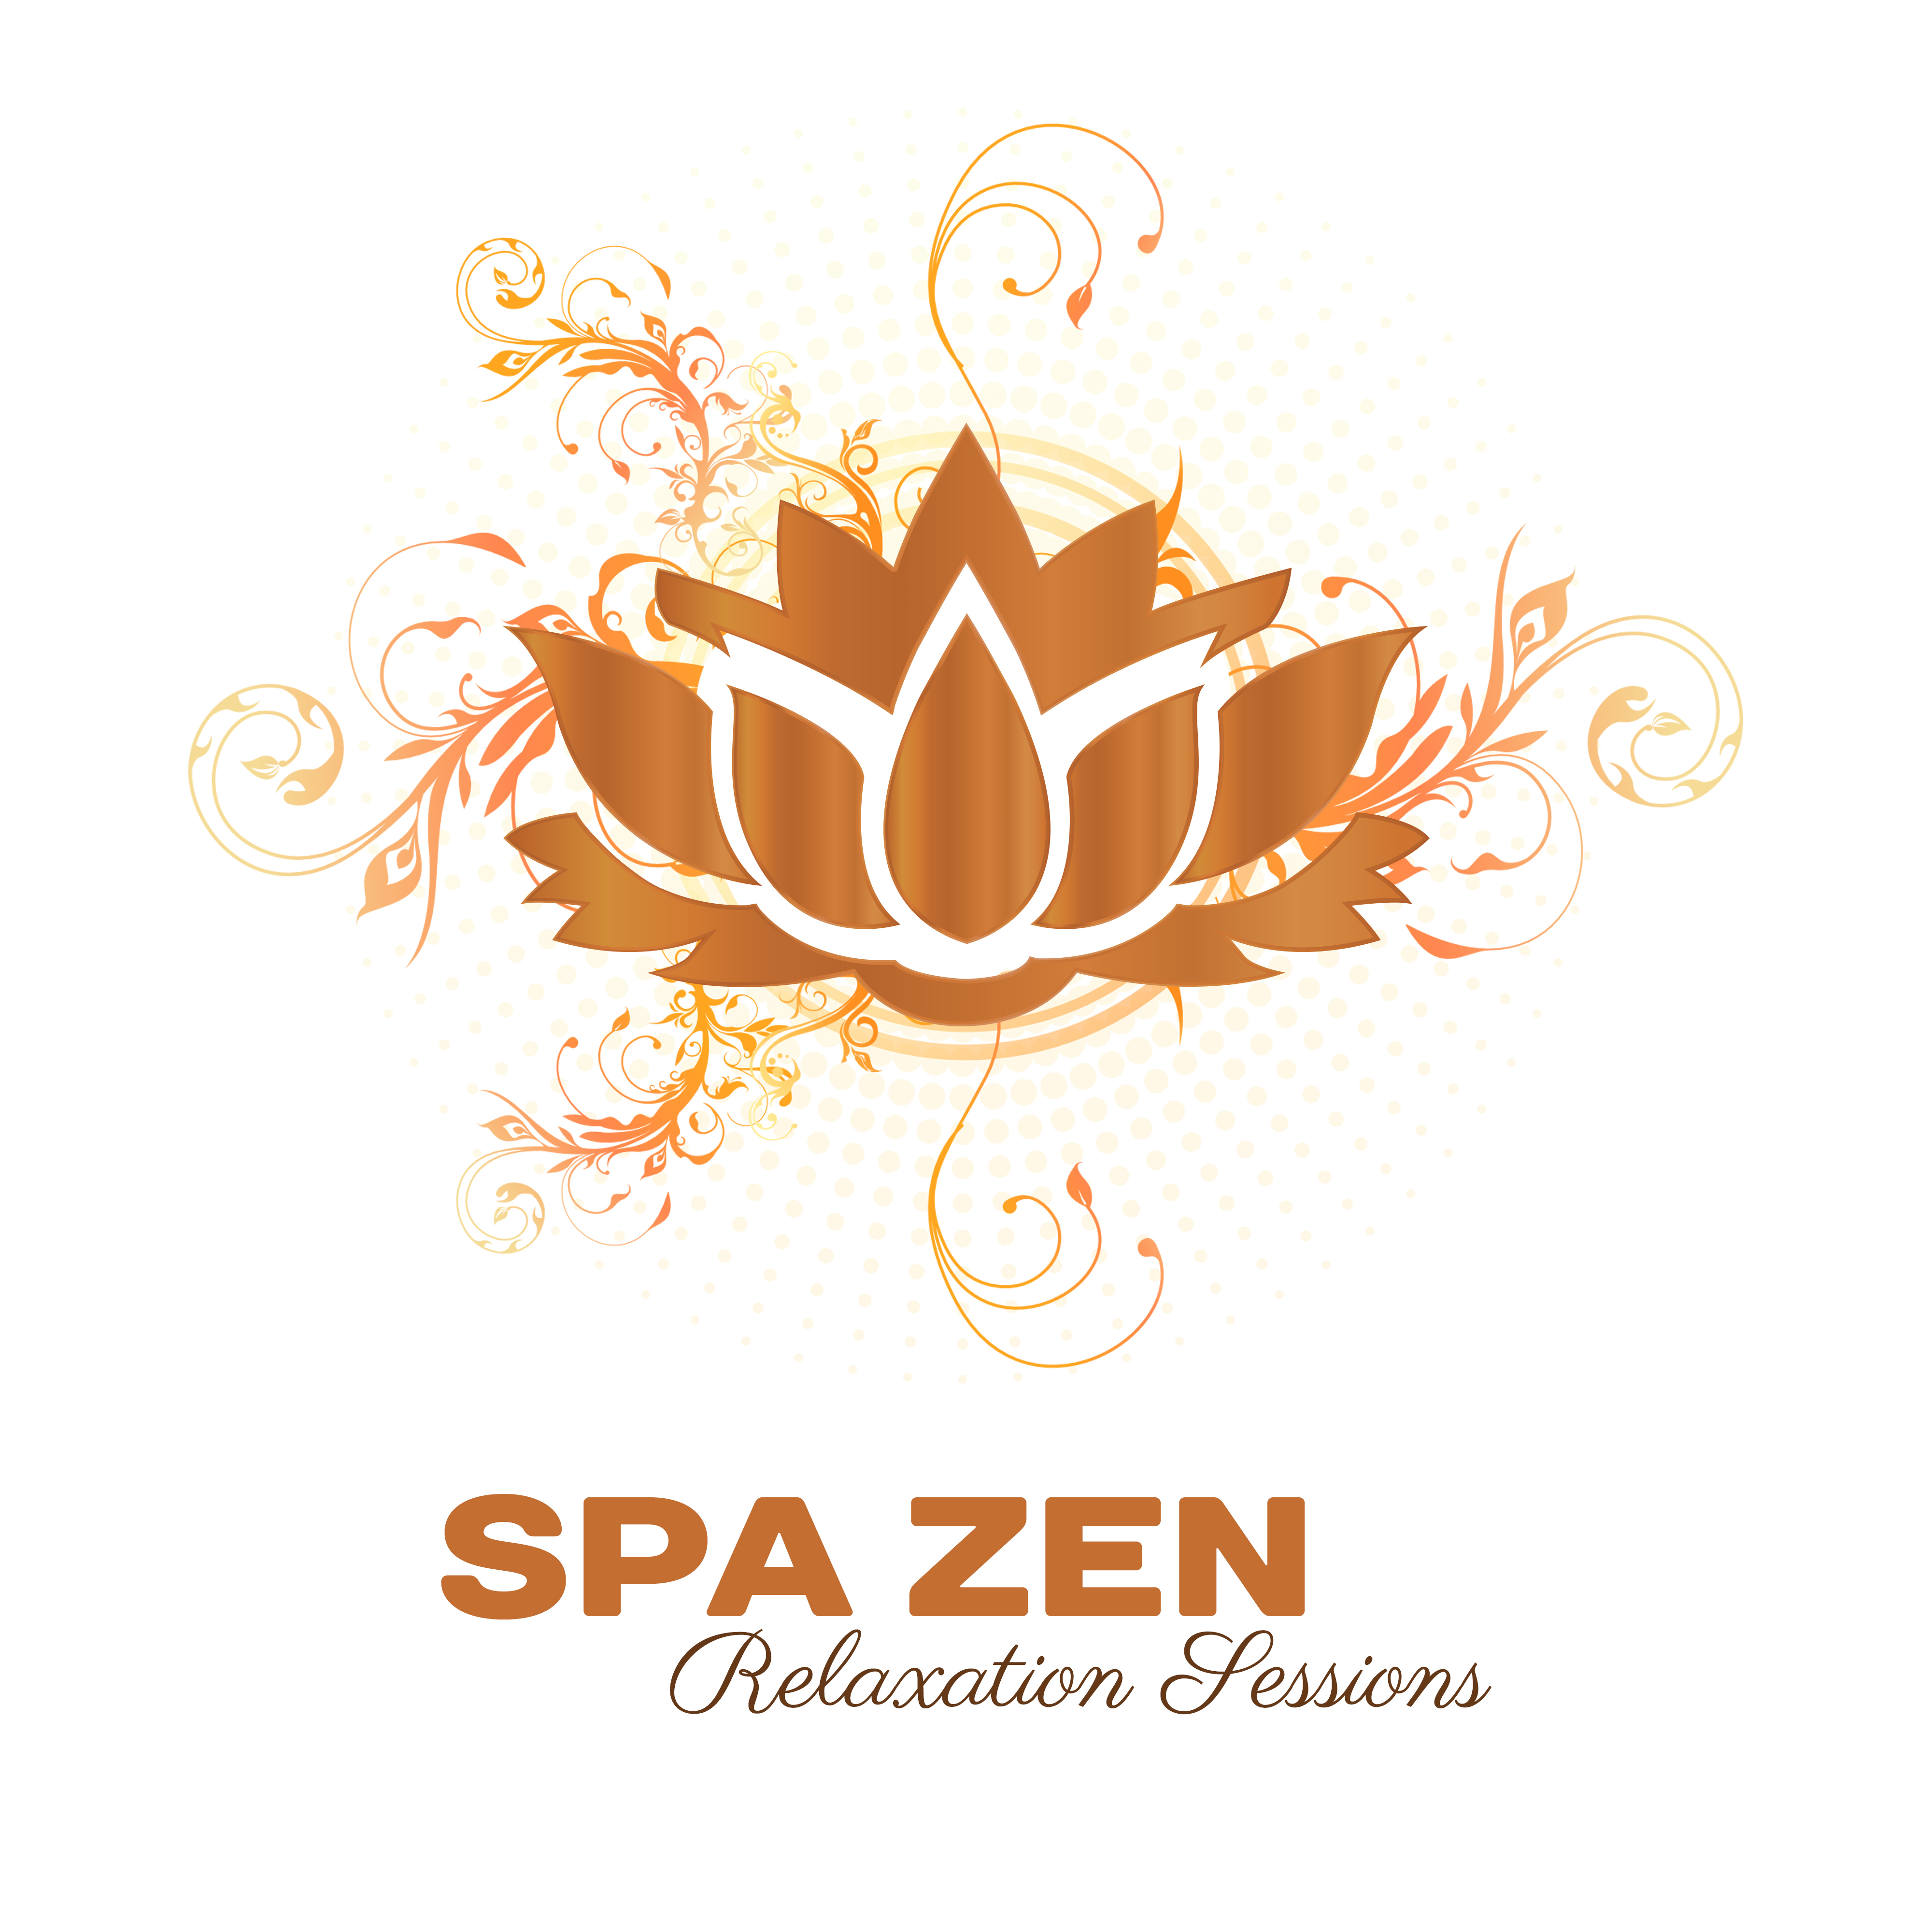 Spa Zen Relaxation Sessions  Estern Zen, Vinaya, Lotus, Solar Dawn, Shades od Relaxation